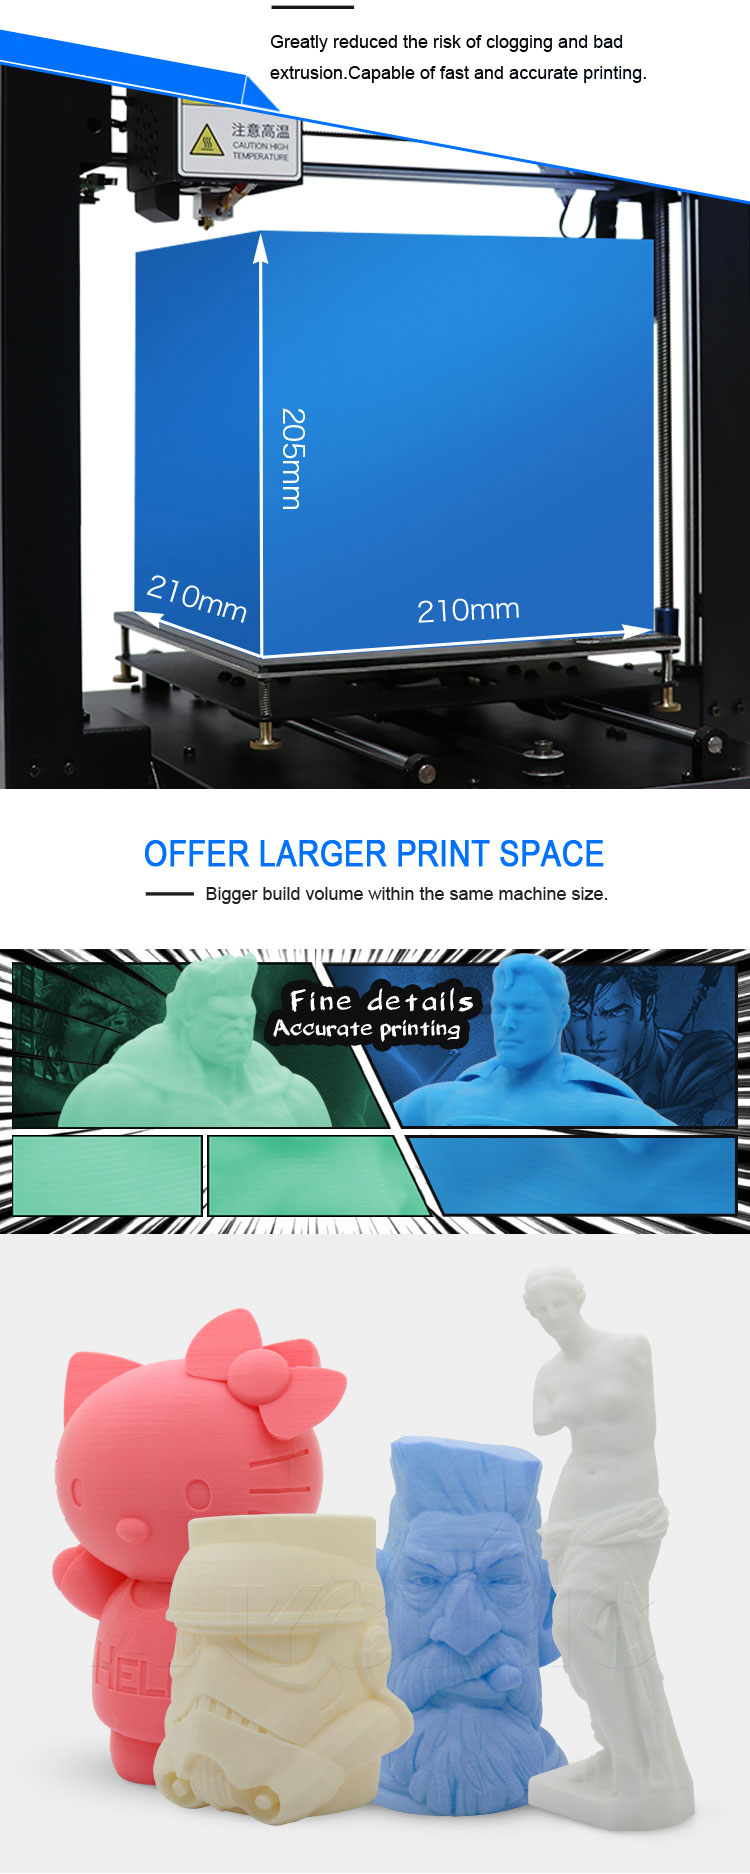 Anycubicreg-I3-Mega-DIY-3D-Printer-Support-Power-Resume-With-Filament-Sensor-210x210x205mm-Printing--1206006